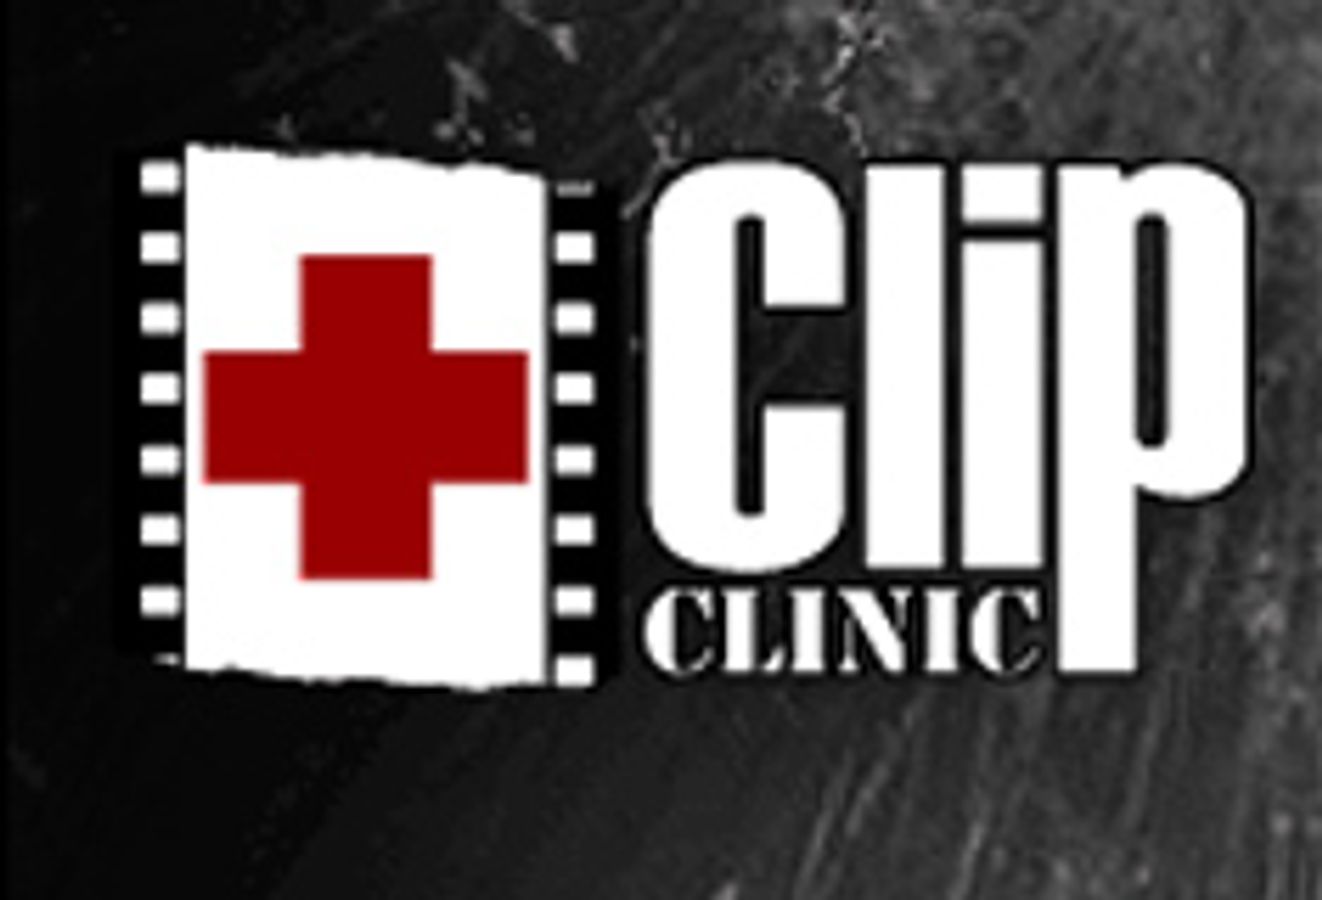 ClipClinic